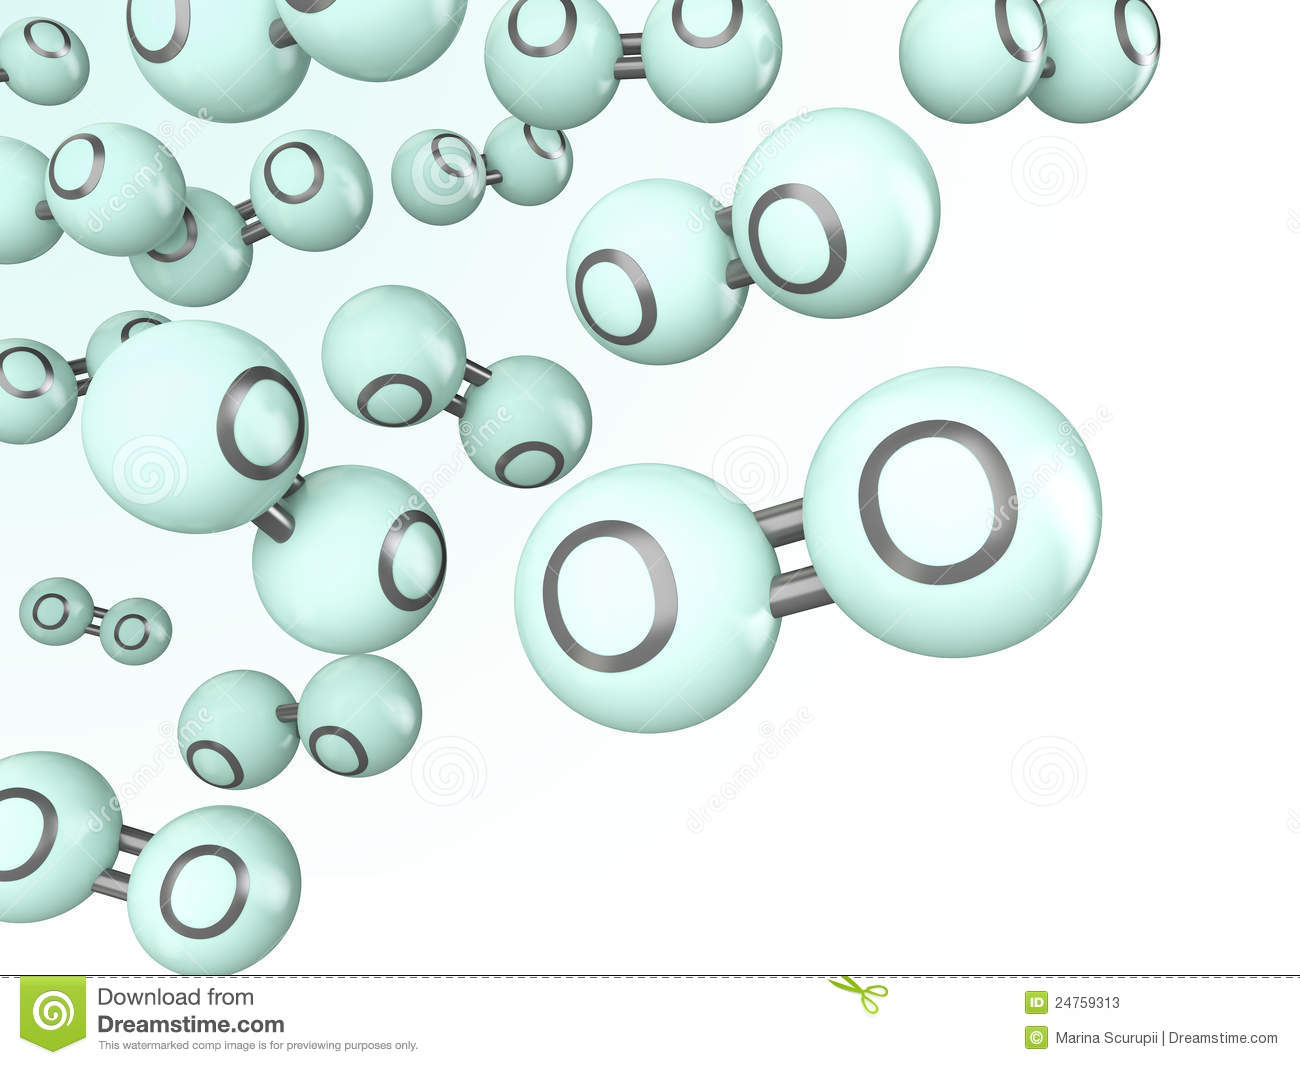 Oxygen Molecule 3d Models Stock Photos   Image  24759313